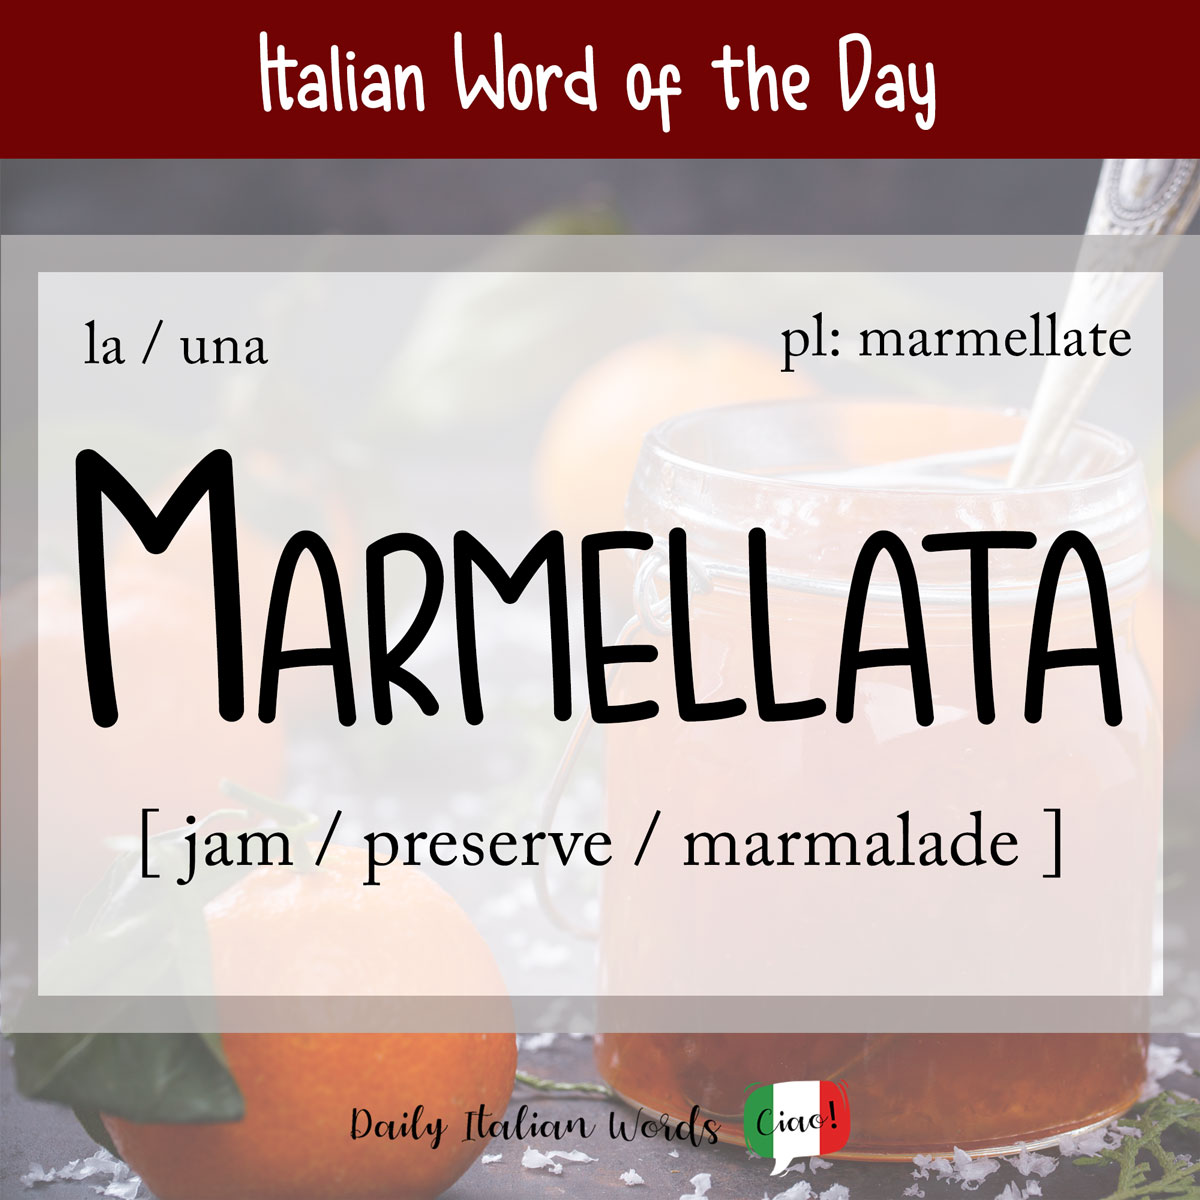 Daily Italian: Marmellata (jam/preserves/jam)